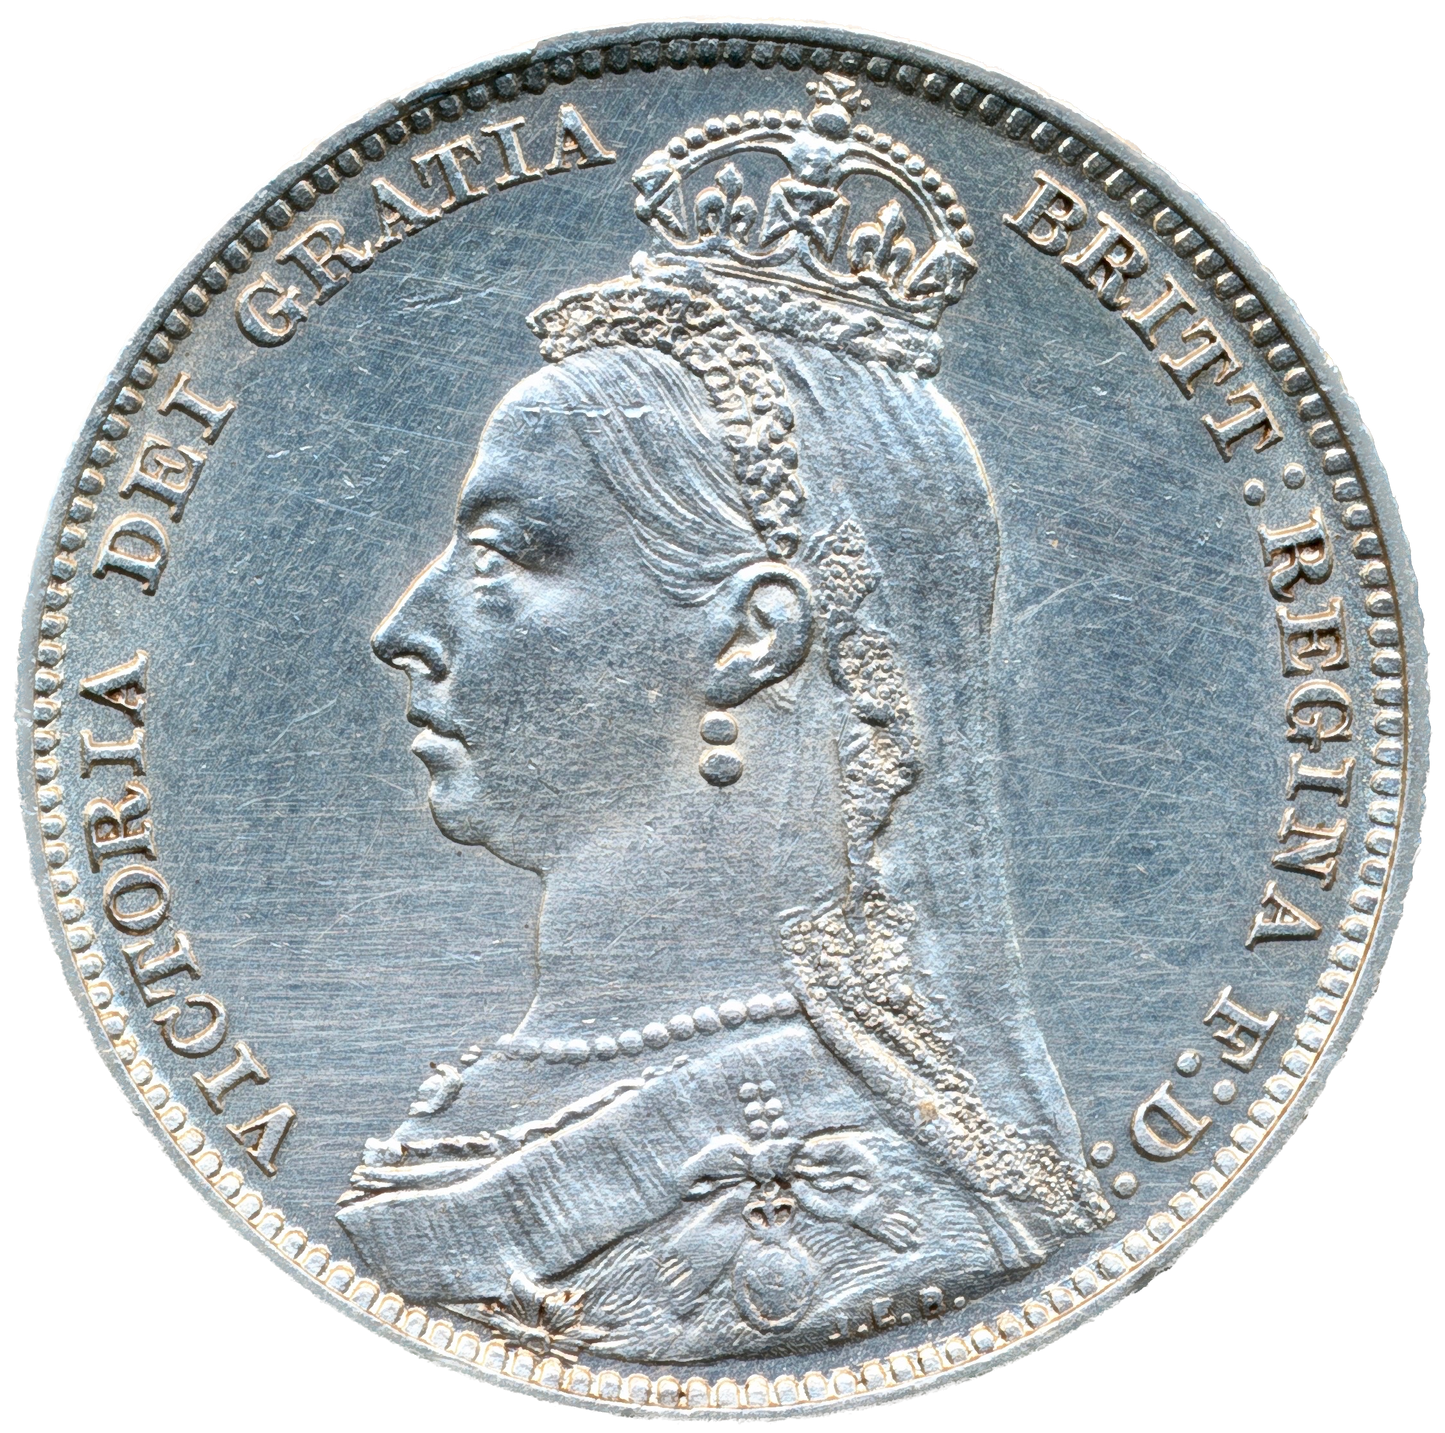 1891 Shilling Large Jubilee head S3927 ESC 3145 AUNC/GEF